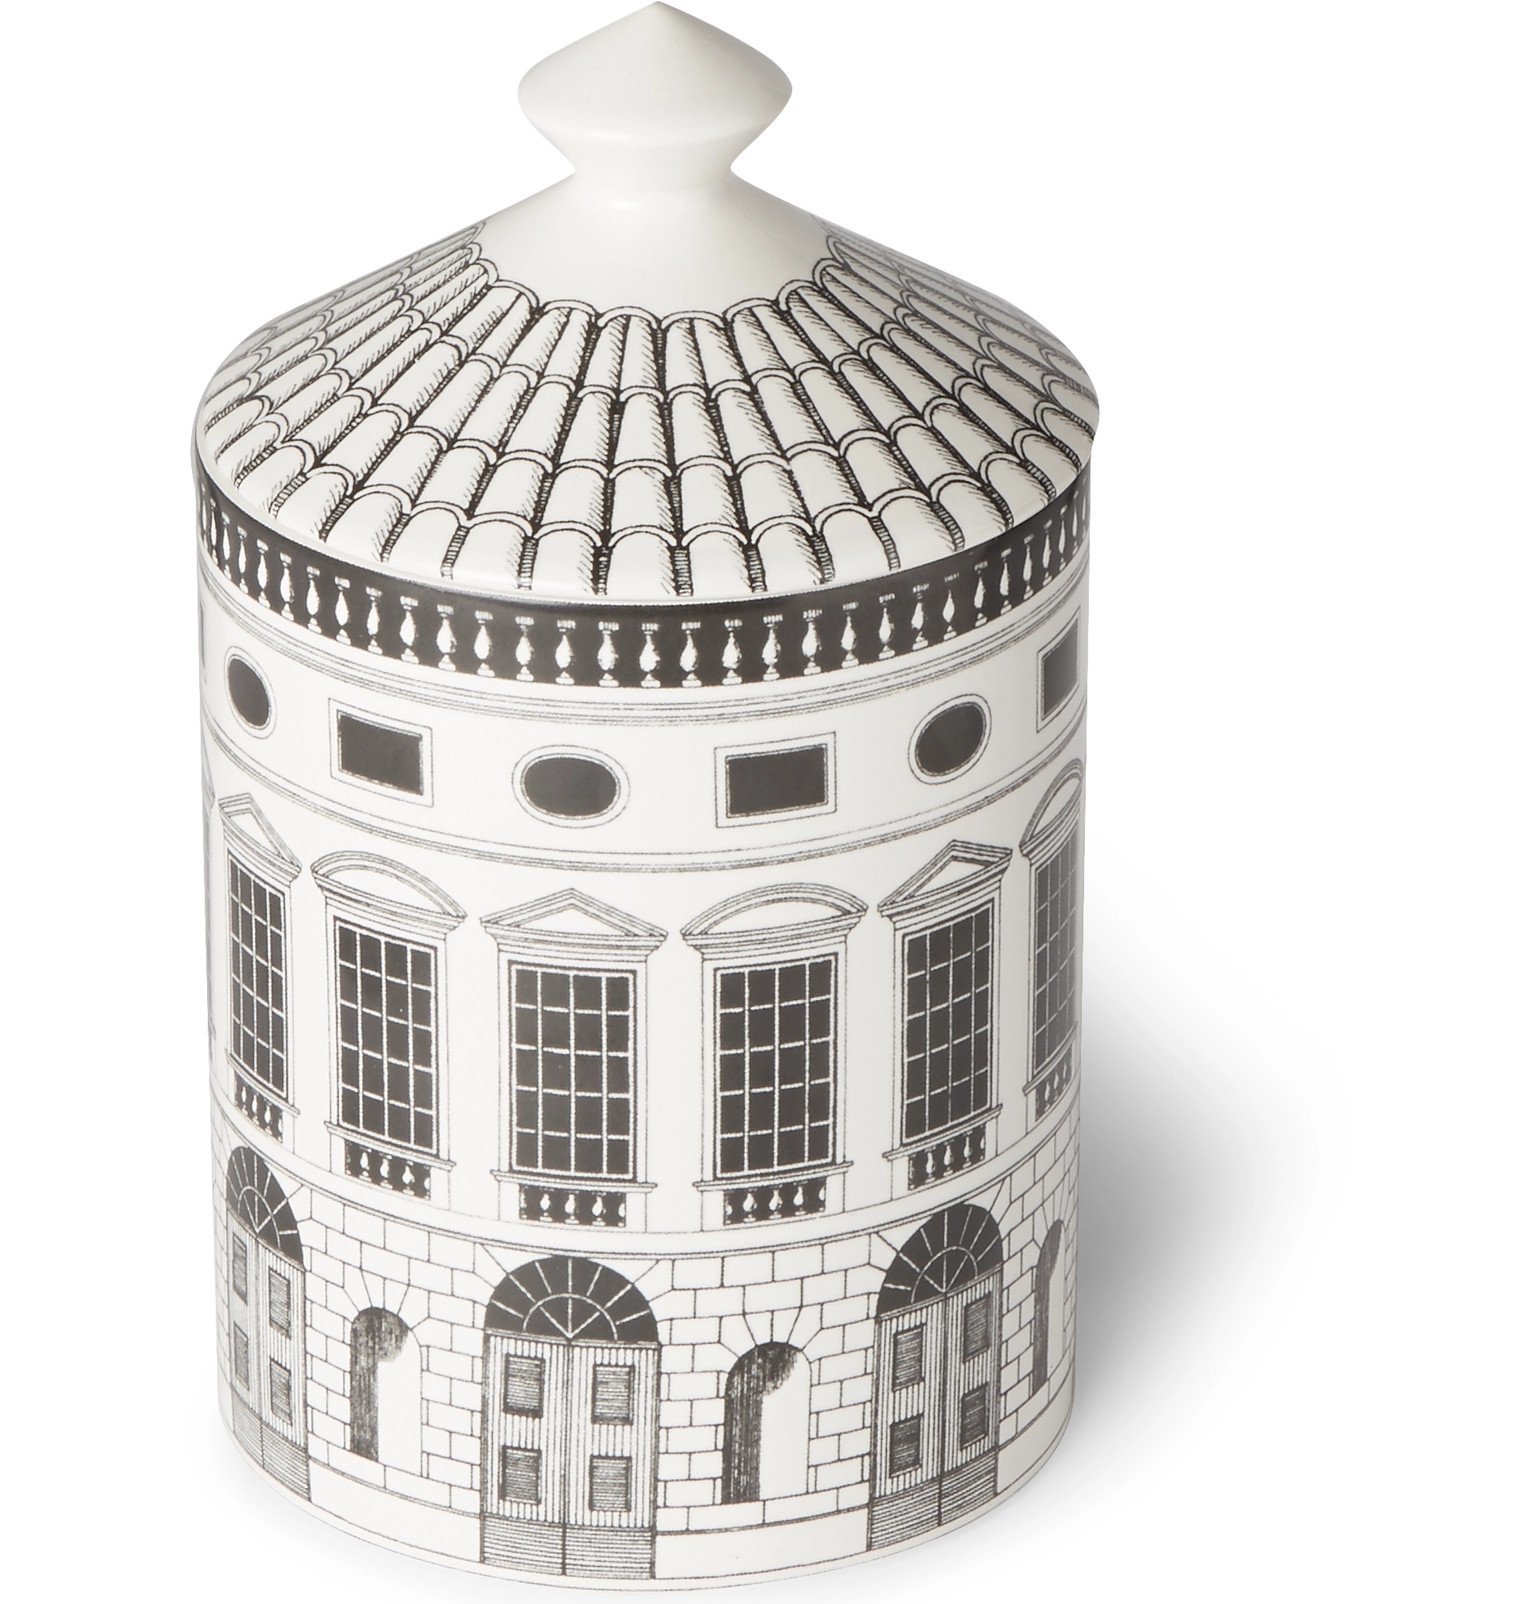 Fornasetti - Architettura scented candle, 300g - White Fornasetti